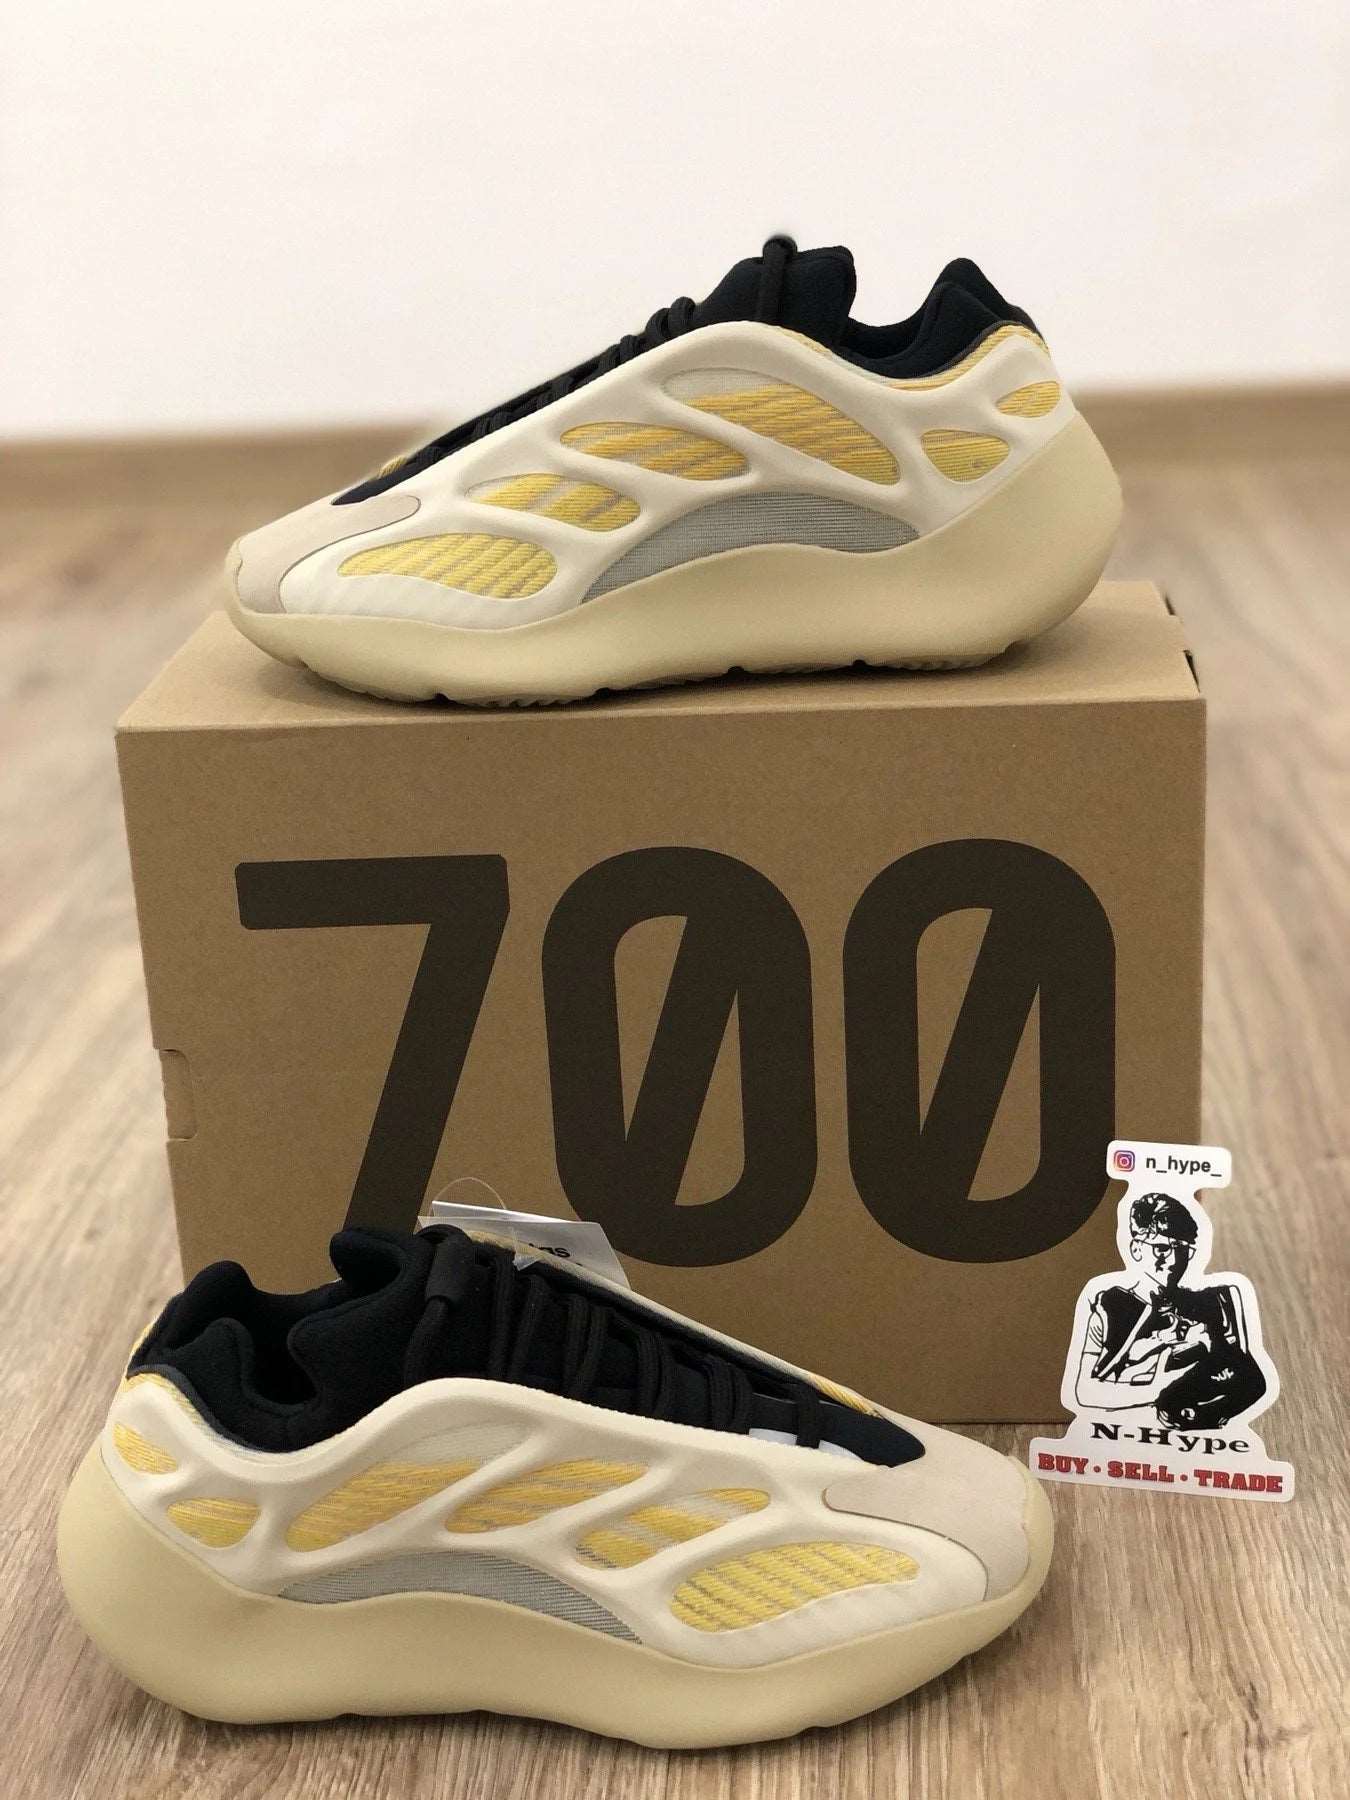 Adidas Yeezy 700 V3 Safflower